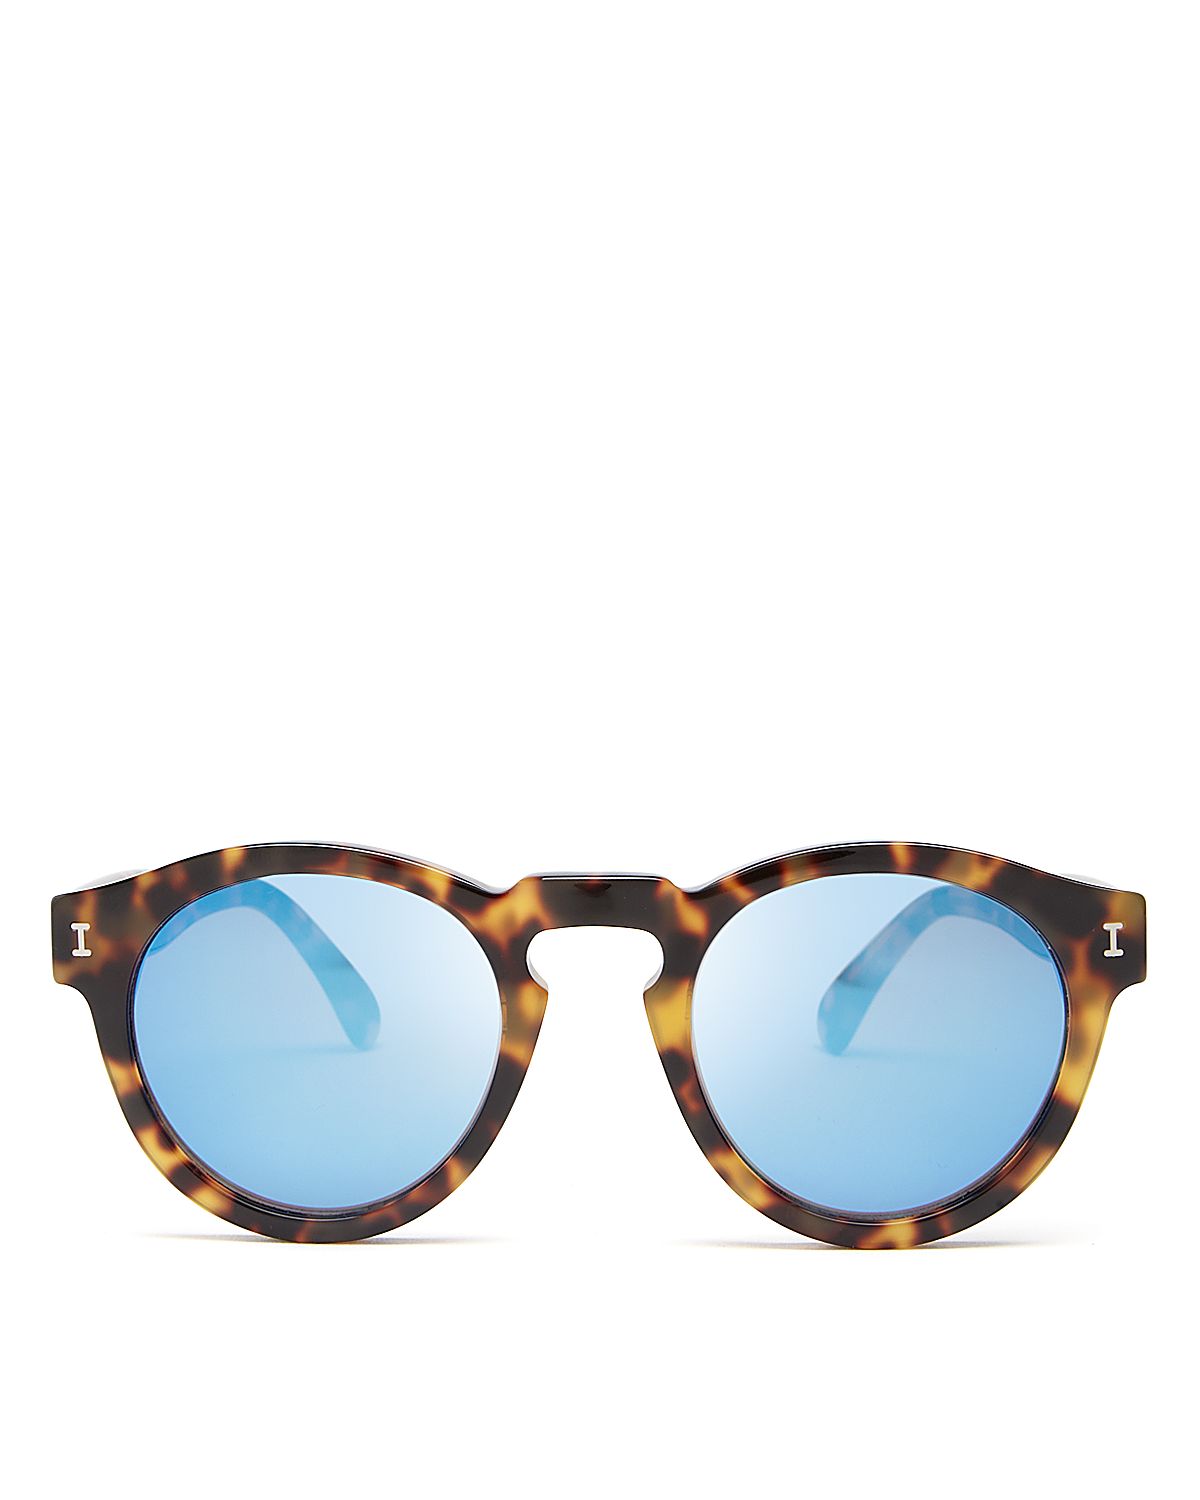 Illesteva - Women's Leonard Mirrored Round Sunglasses, 48mm